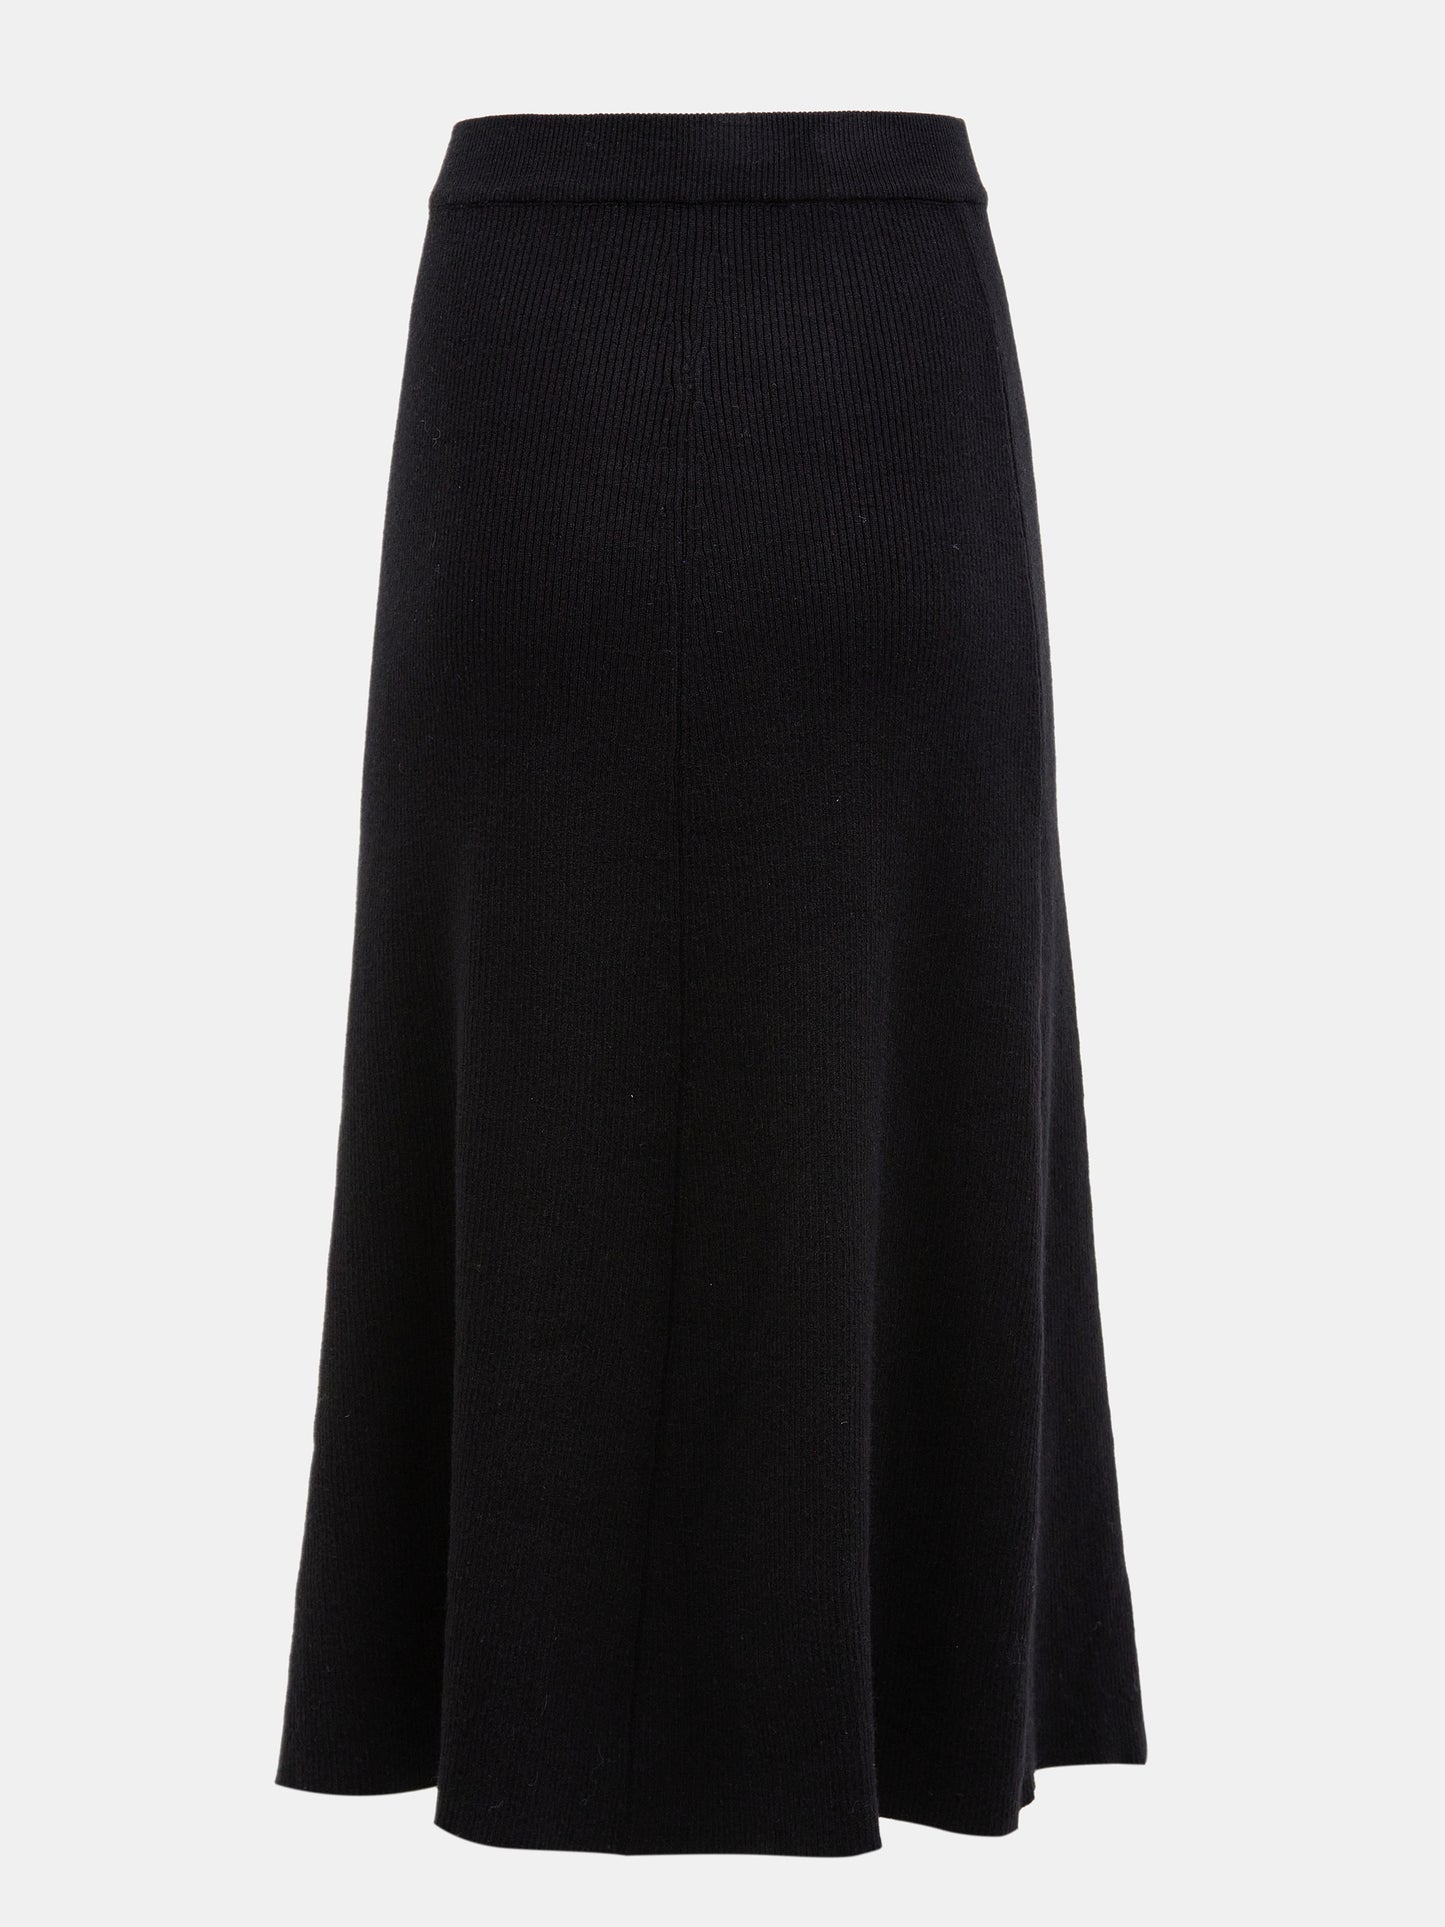 Cashmere Cardigan/Skirt Set, Black